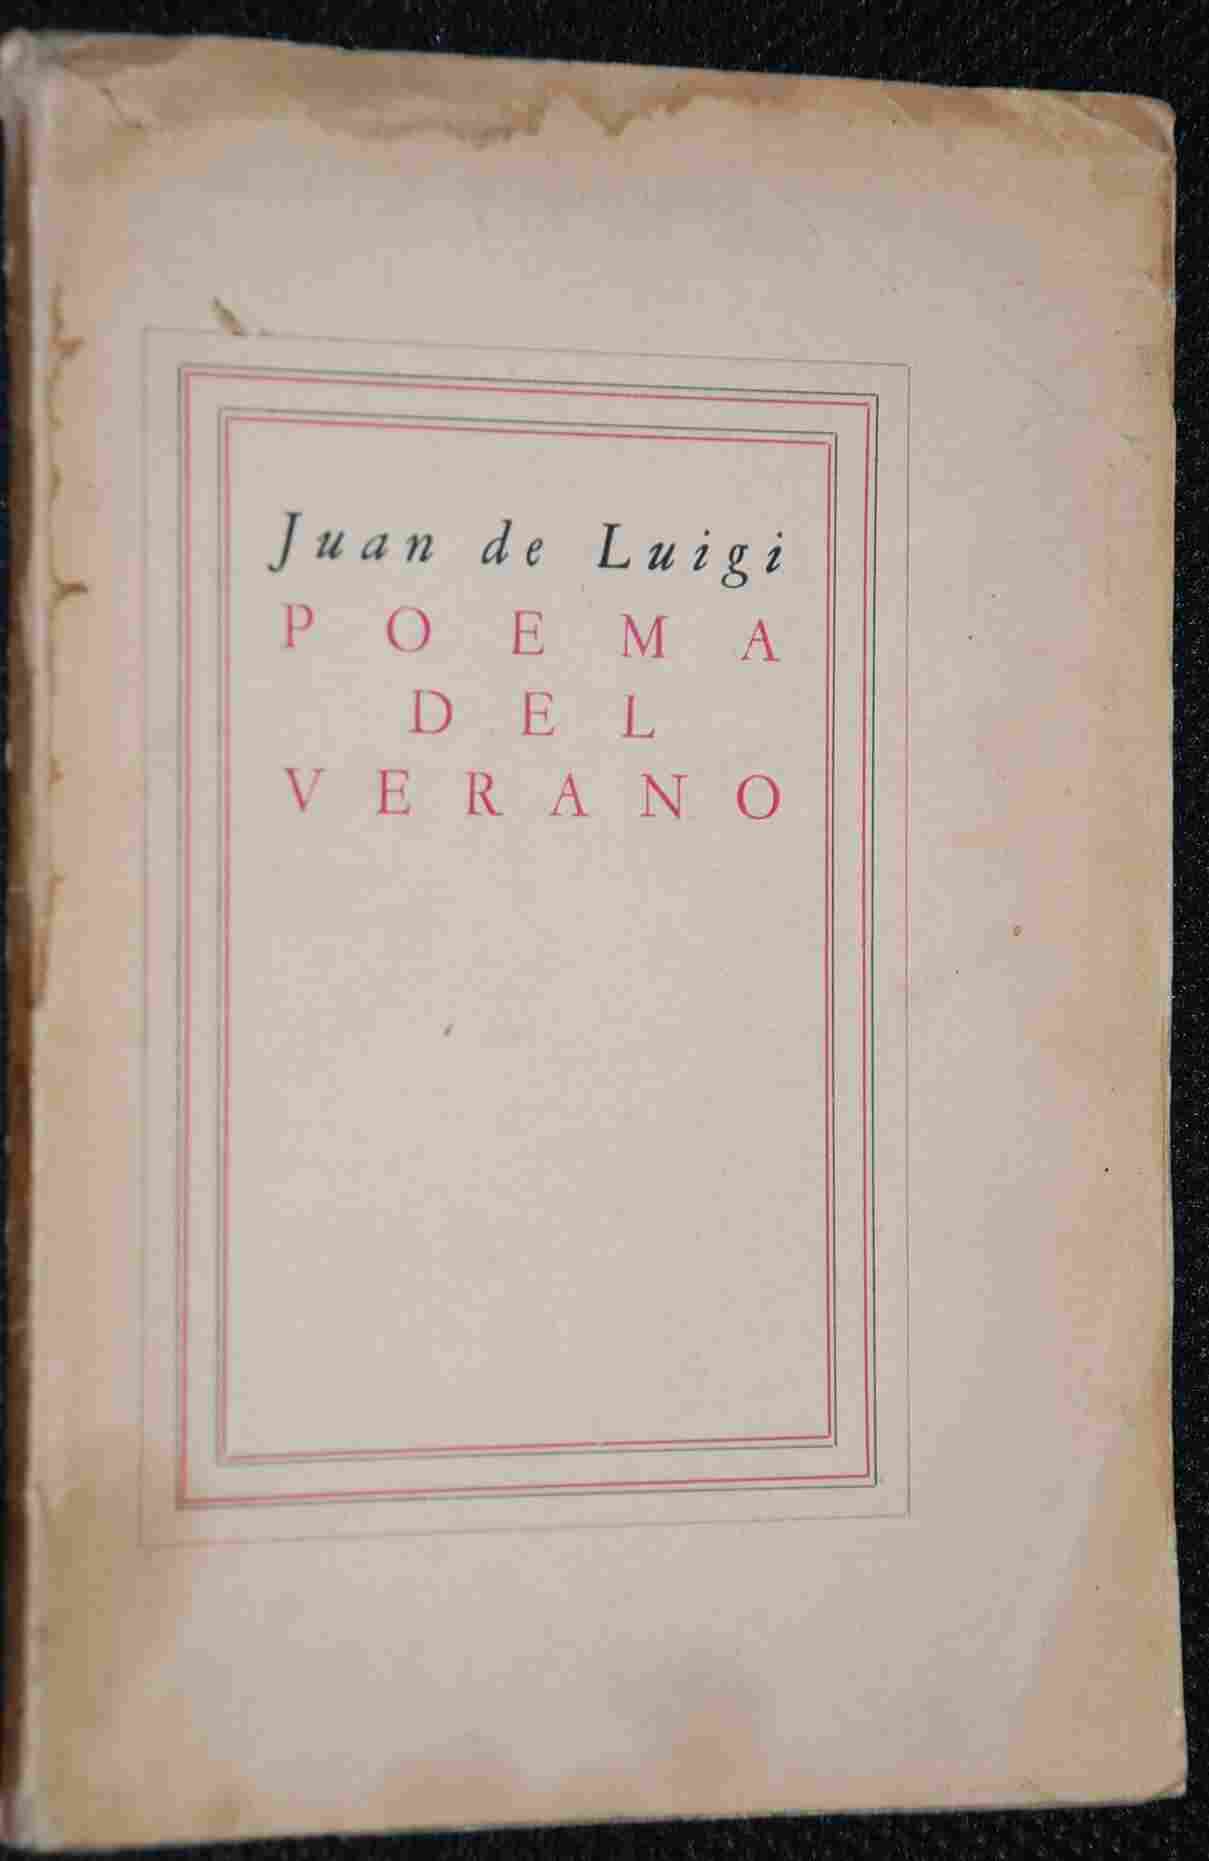 Juan de Luigi -  Poema del Vernaro